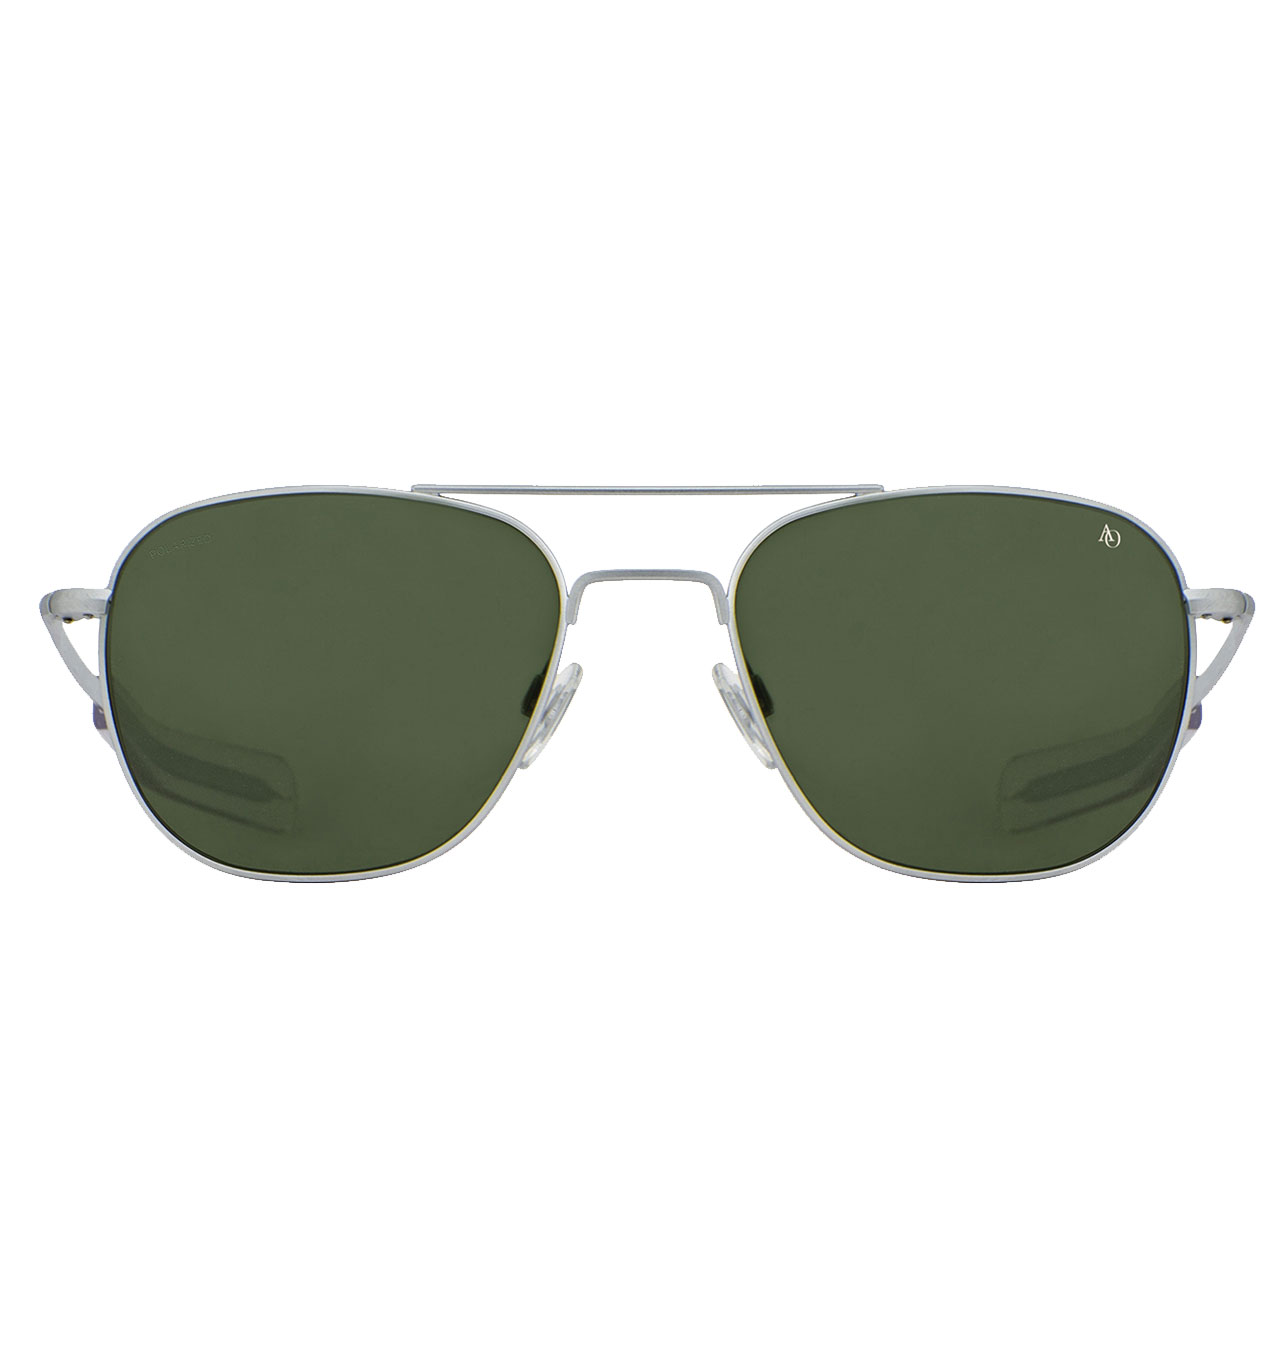 American-Optical---Original-Pilot-Sunglasses---Matt-Chrome-1